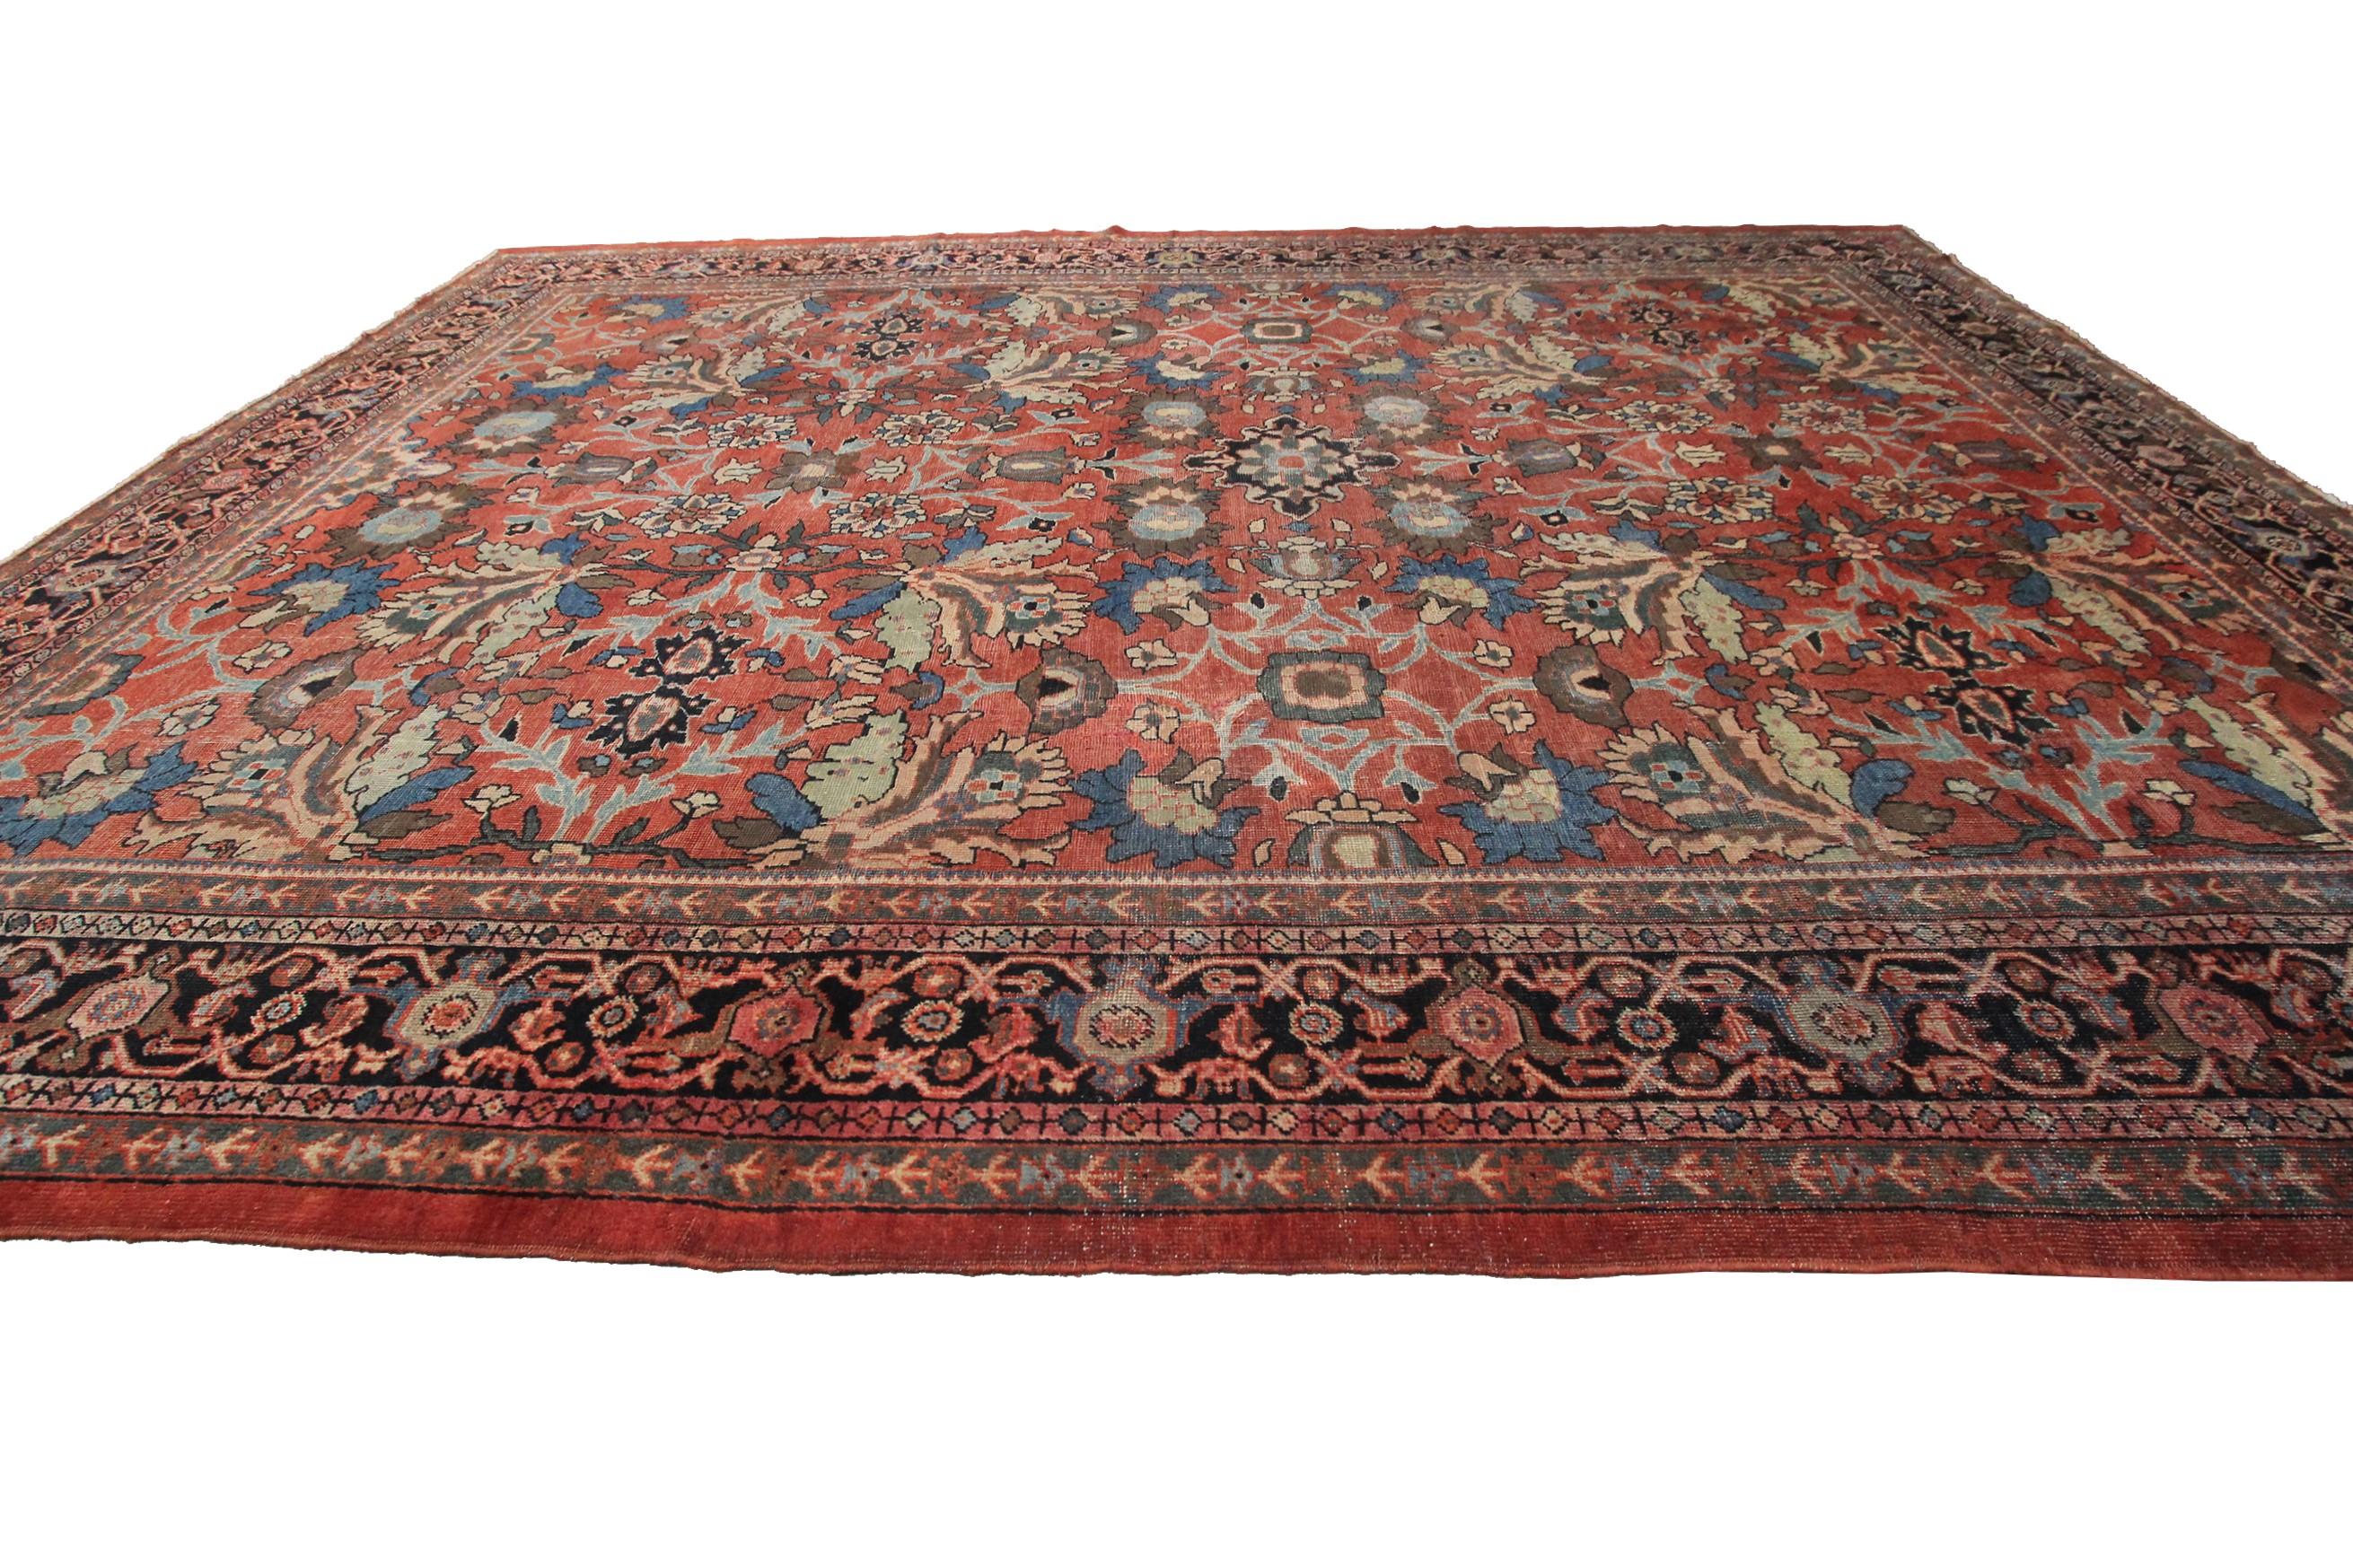 Antique Persian Mahal rug Sultanabad handmade geometric rug Circa.1880 
Measures: 10'2